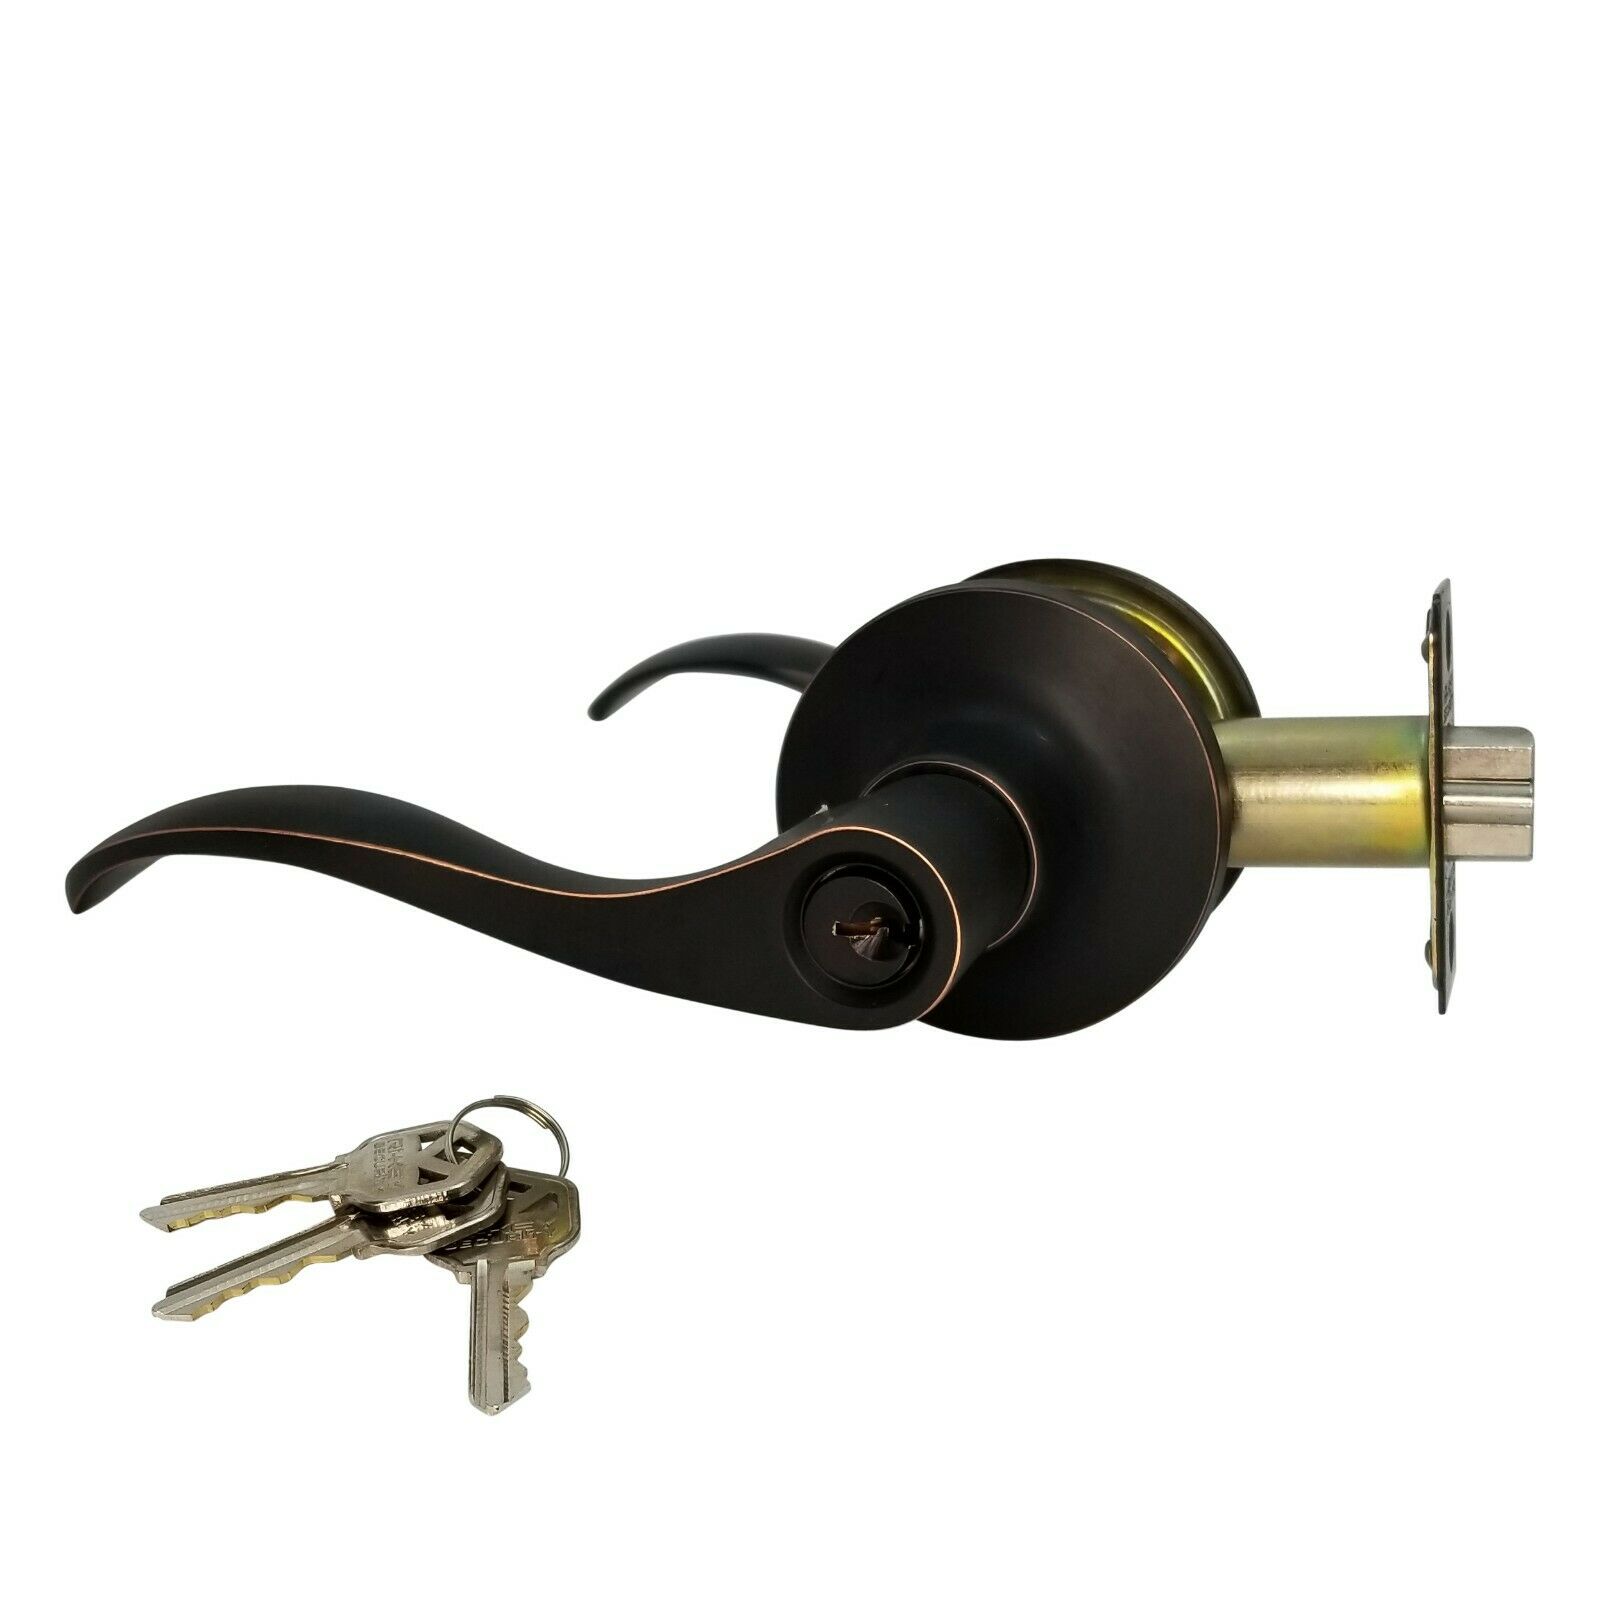 RI-KEY SECURITY Lever Door Lock Entry Keyed Cylinder Wave Handle 3 Keys Oil-Rub Bronze Finish SC RH - image 1 of 8